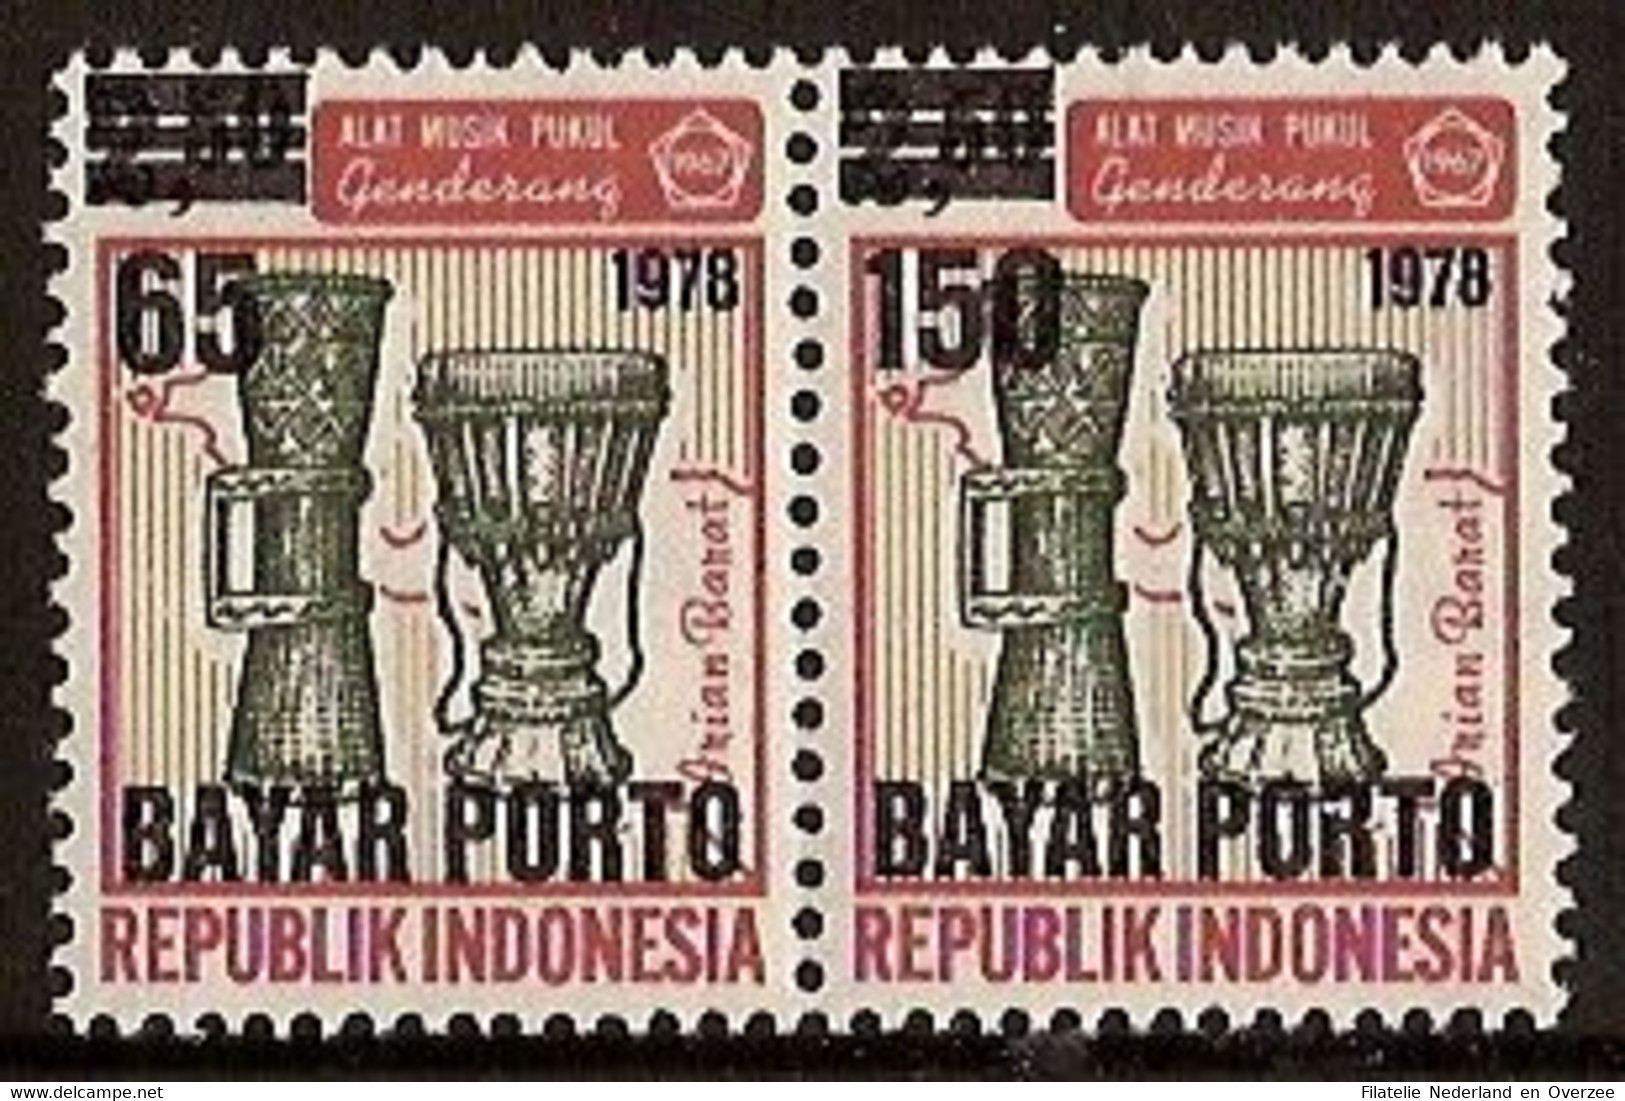 Indonesië / Indonesia 1978 Port 74+76A Postfris/MNH Tax, Due Stamp - Indonesië